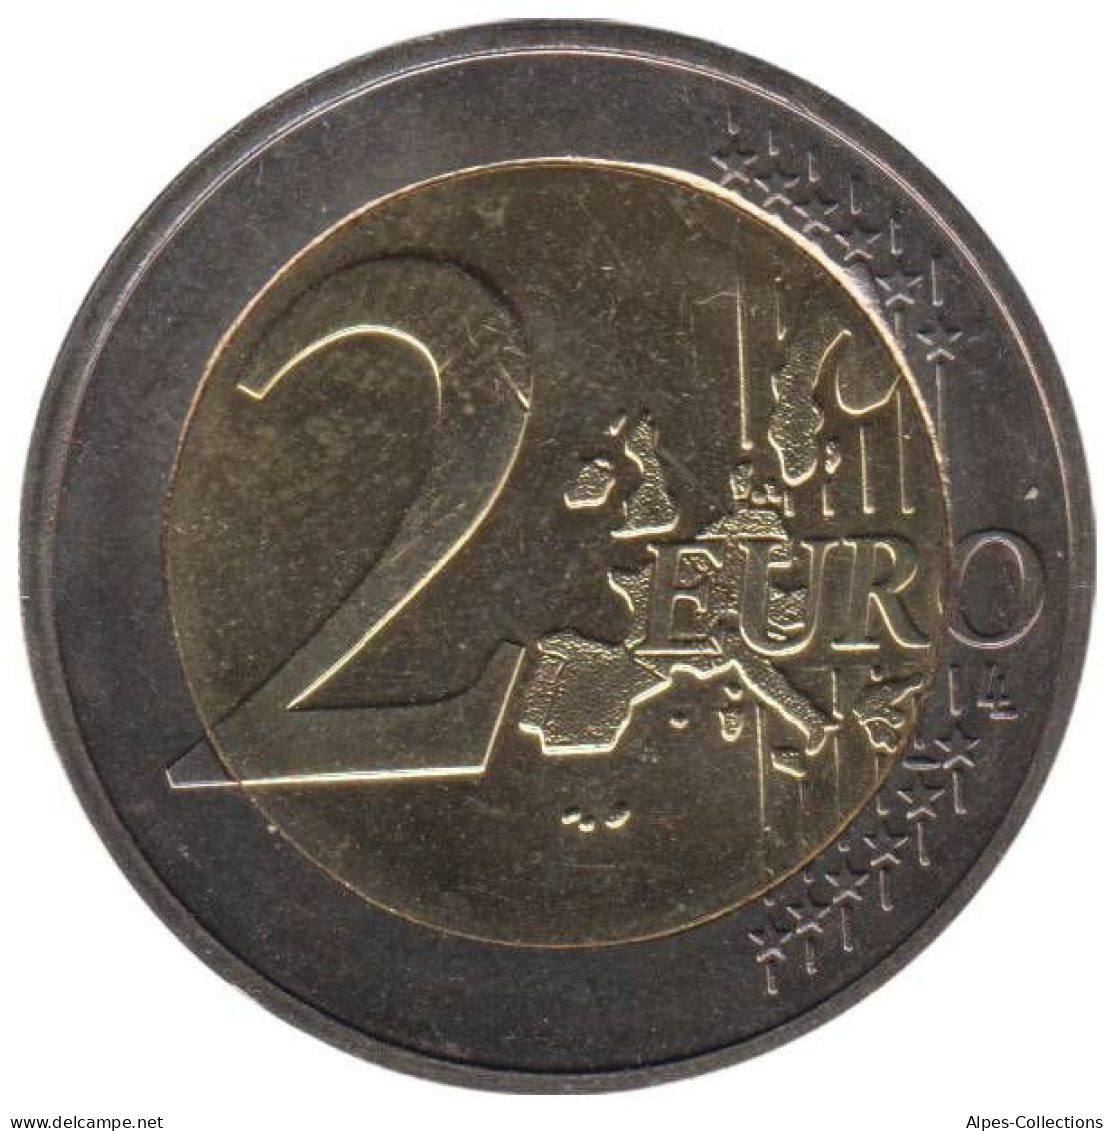 LU20003.1 - LUXEMBOURG - 2 Euros - 2003 - Lussemburgo